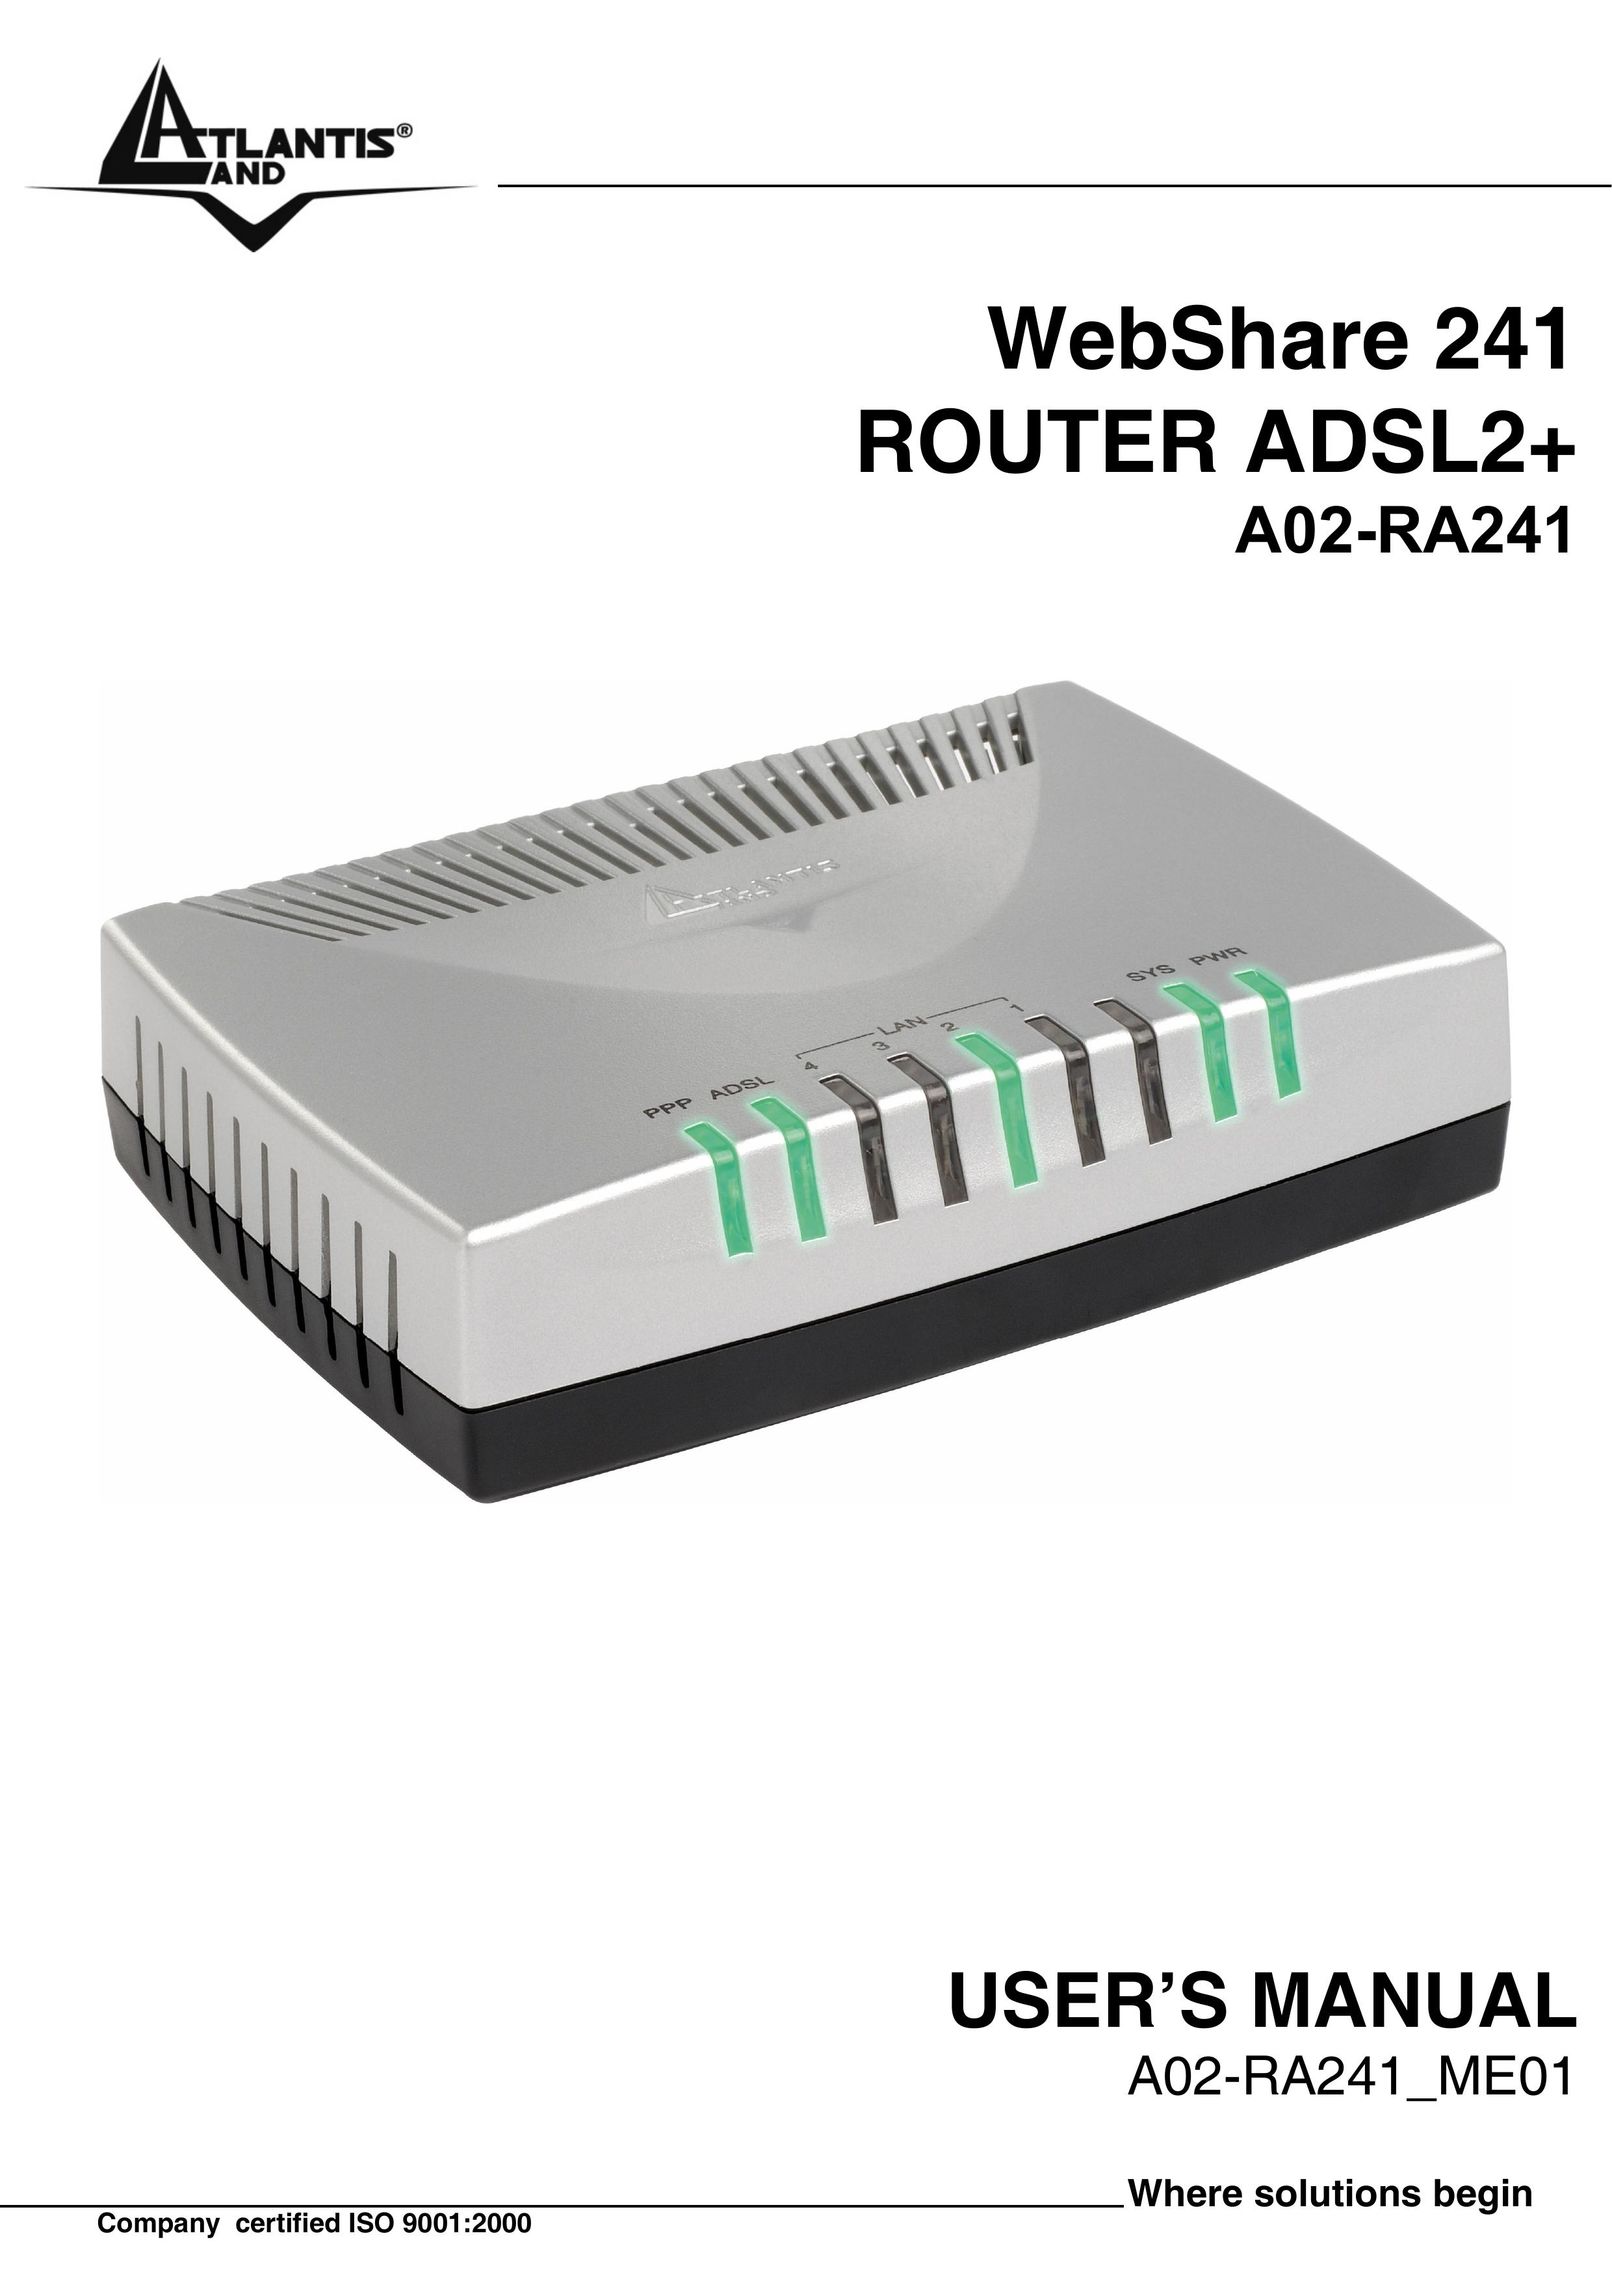 Atlantis Land A02-RA241 Network Router User Manual